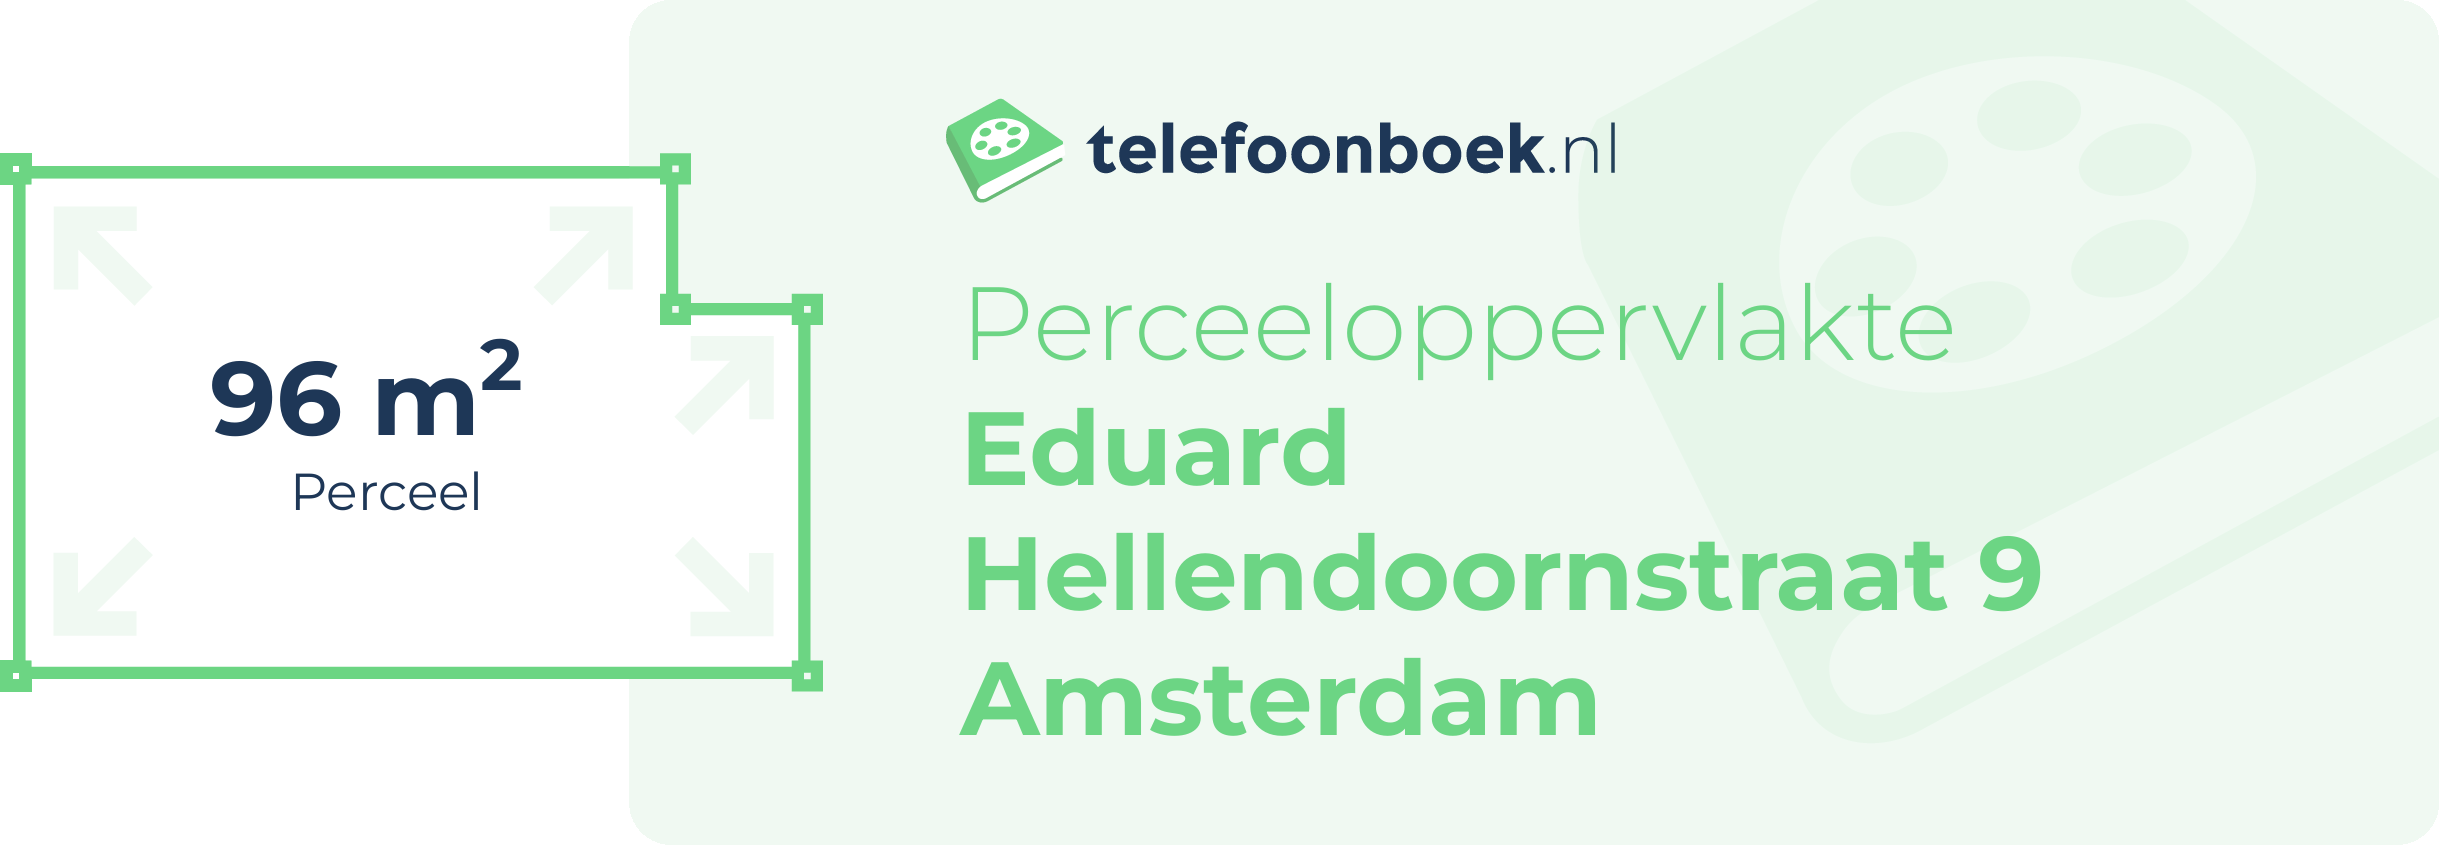 Perceeloppervlakte Eduard Hellendoornstraat 9 Amsterdam